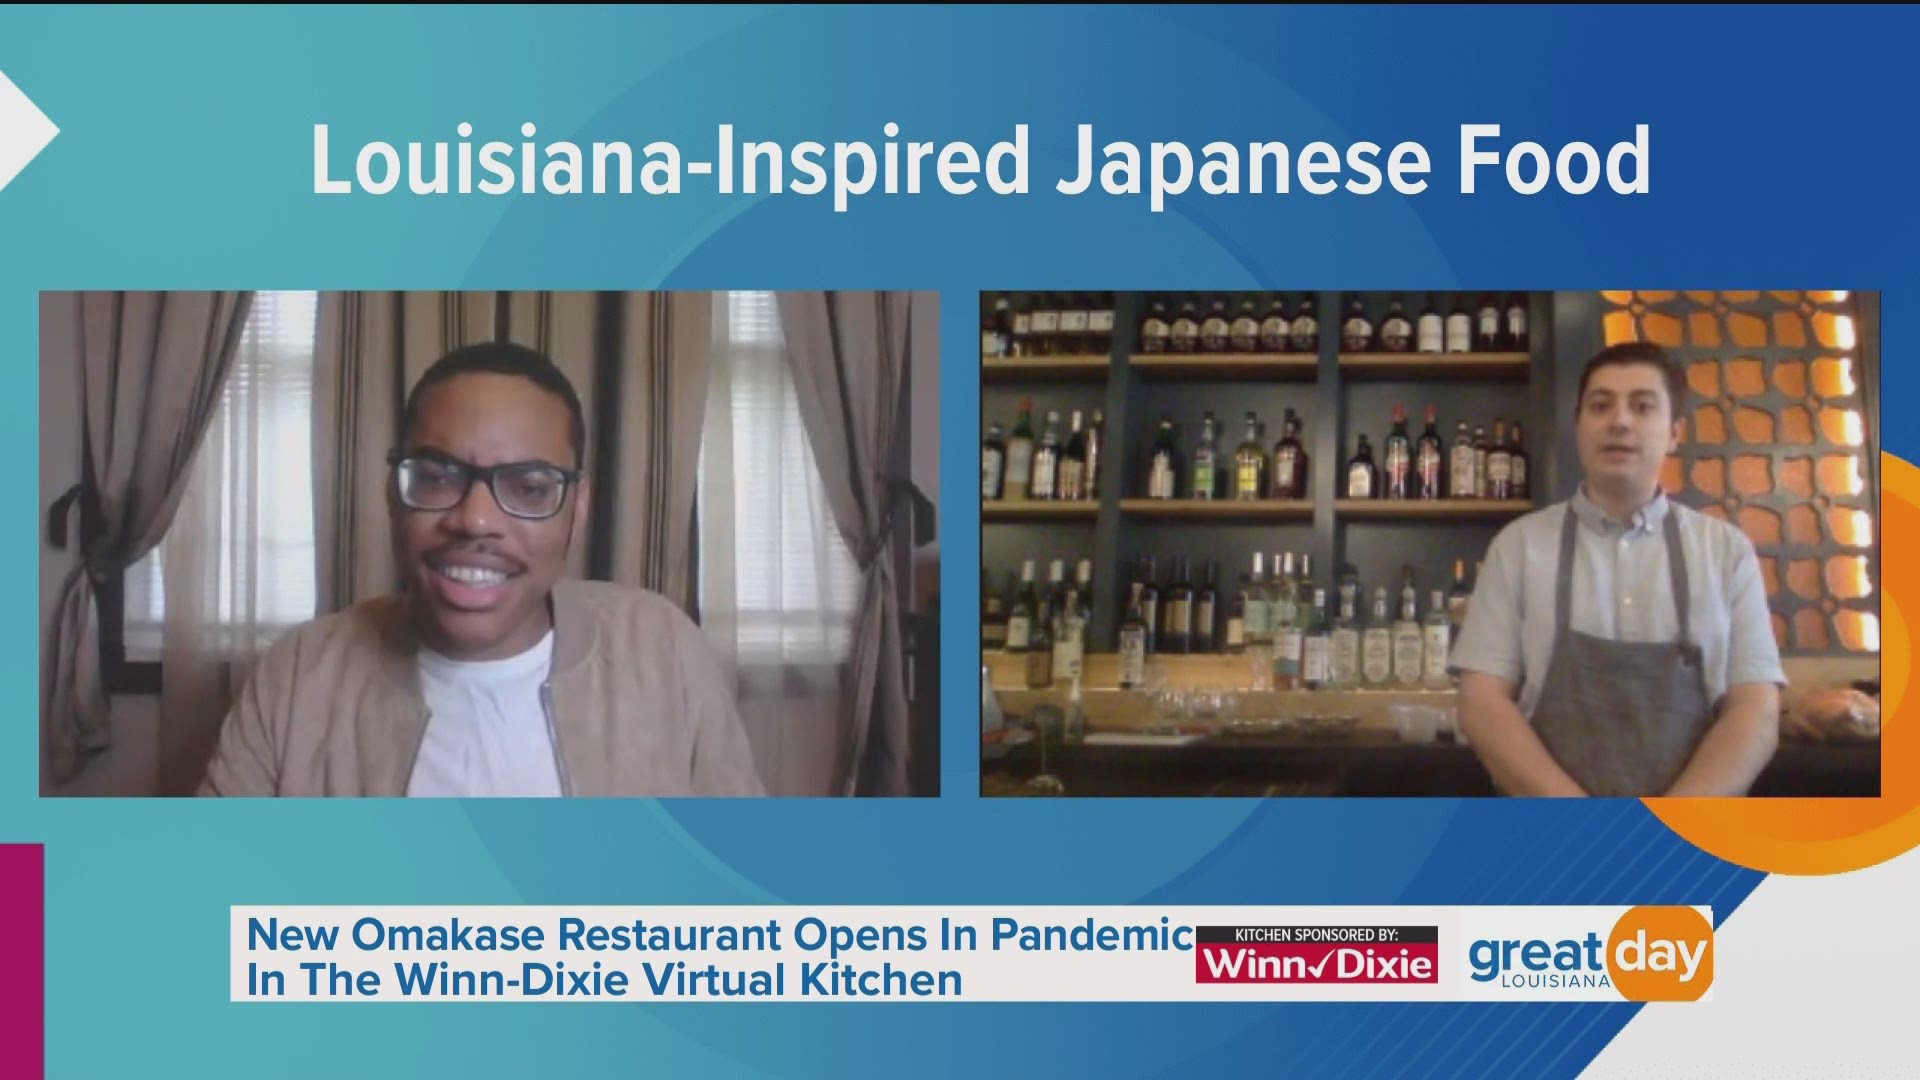 Louisiana-inspired Japanese restaurant, Yo Nashi, cooked an oyster dish in the Winn-Dixie Virtual Kitchen.